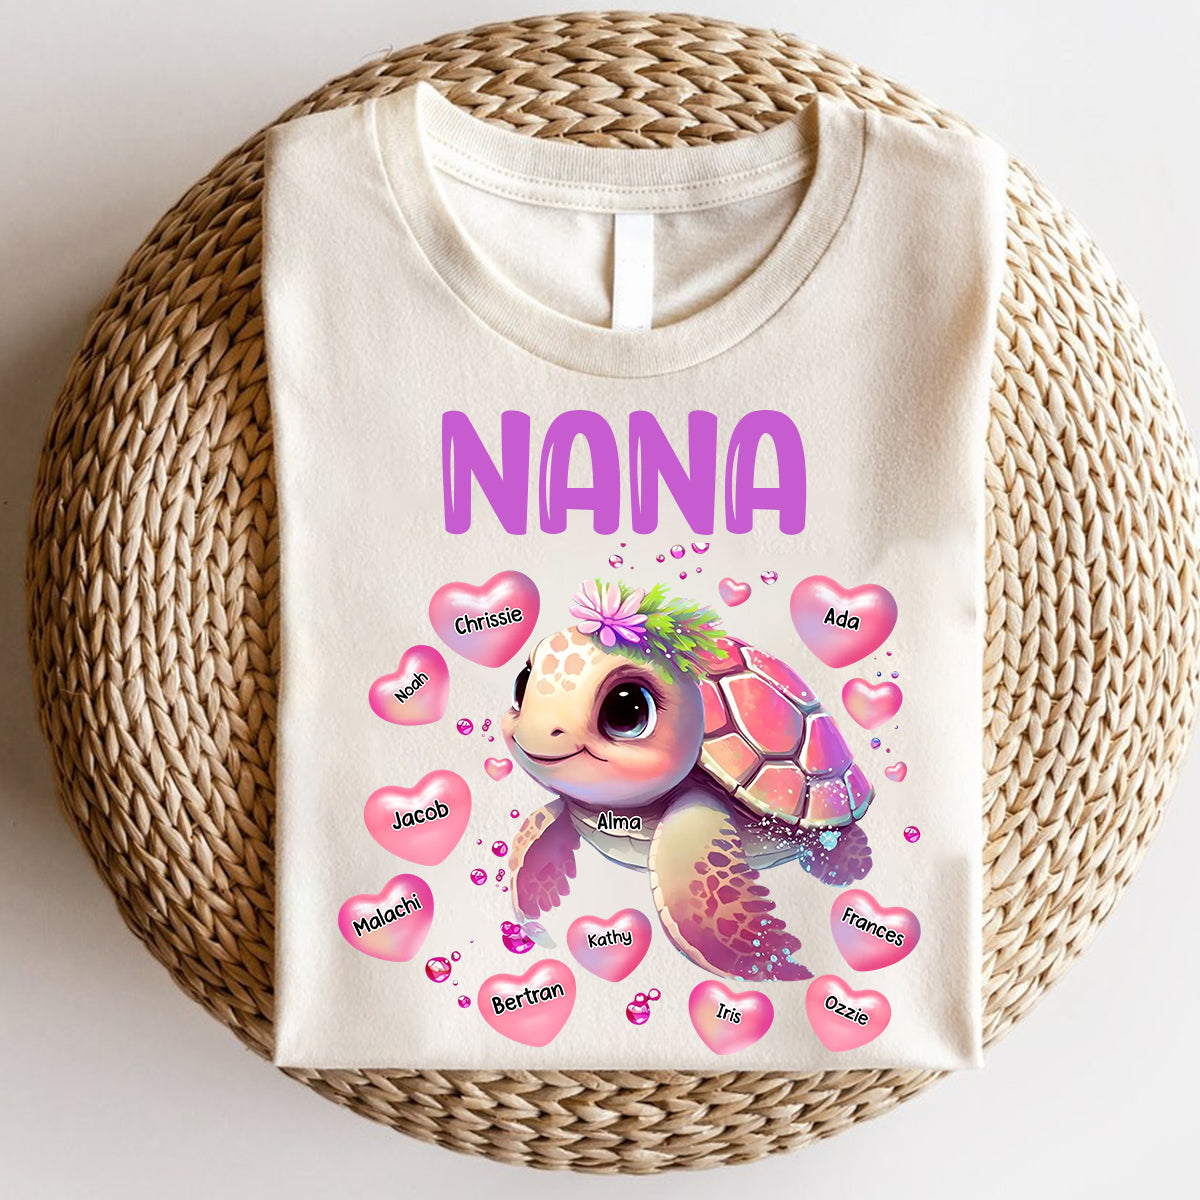 Personalized Turtle Grandma Pure Cotton T-shirt Hearts & Kid Names